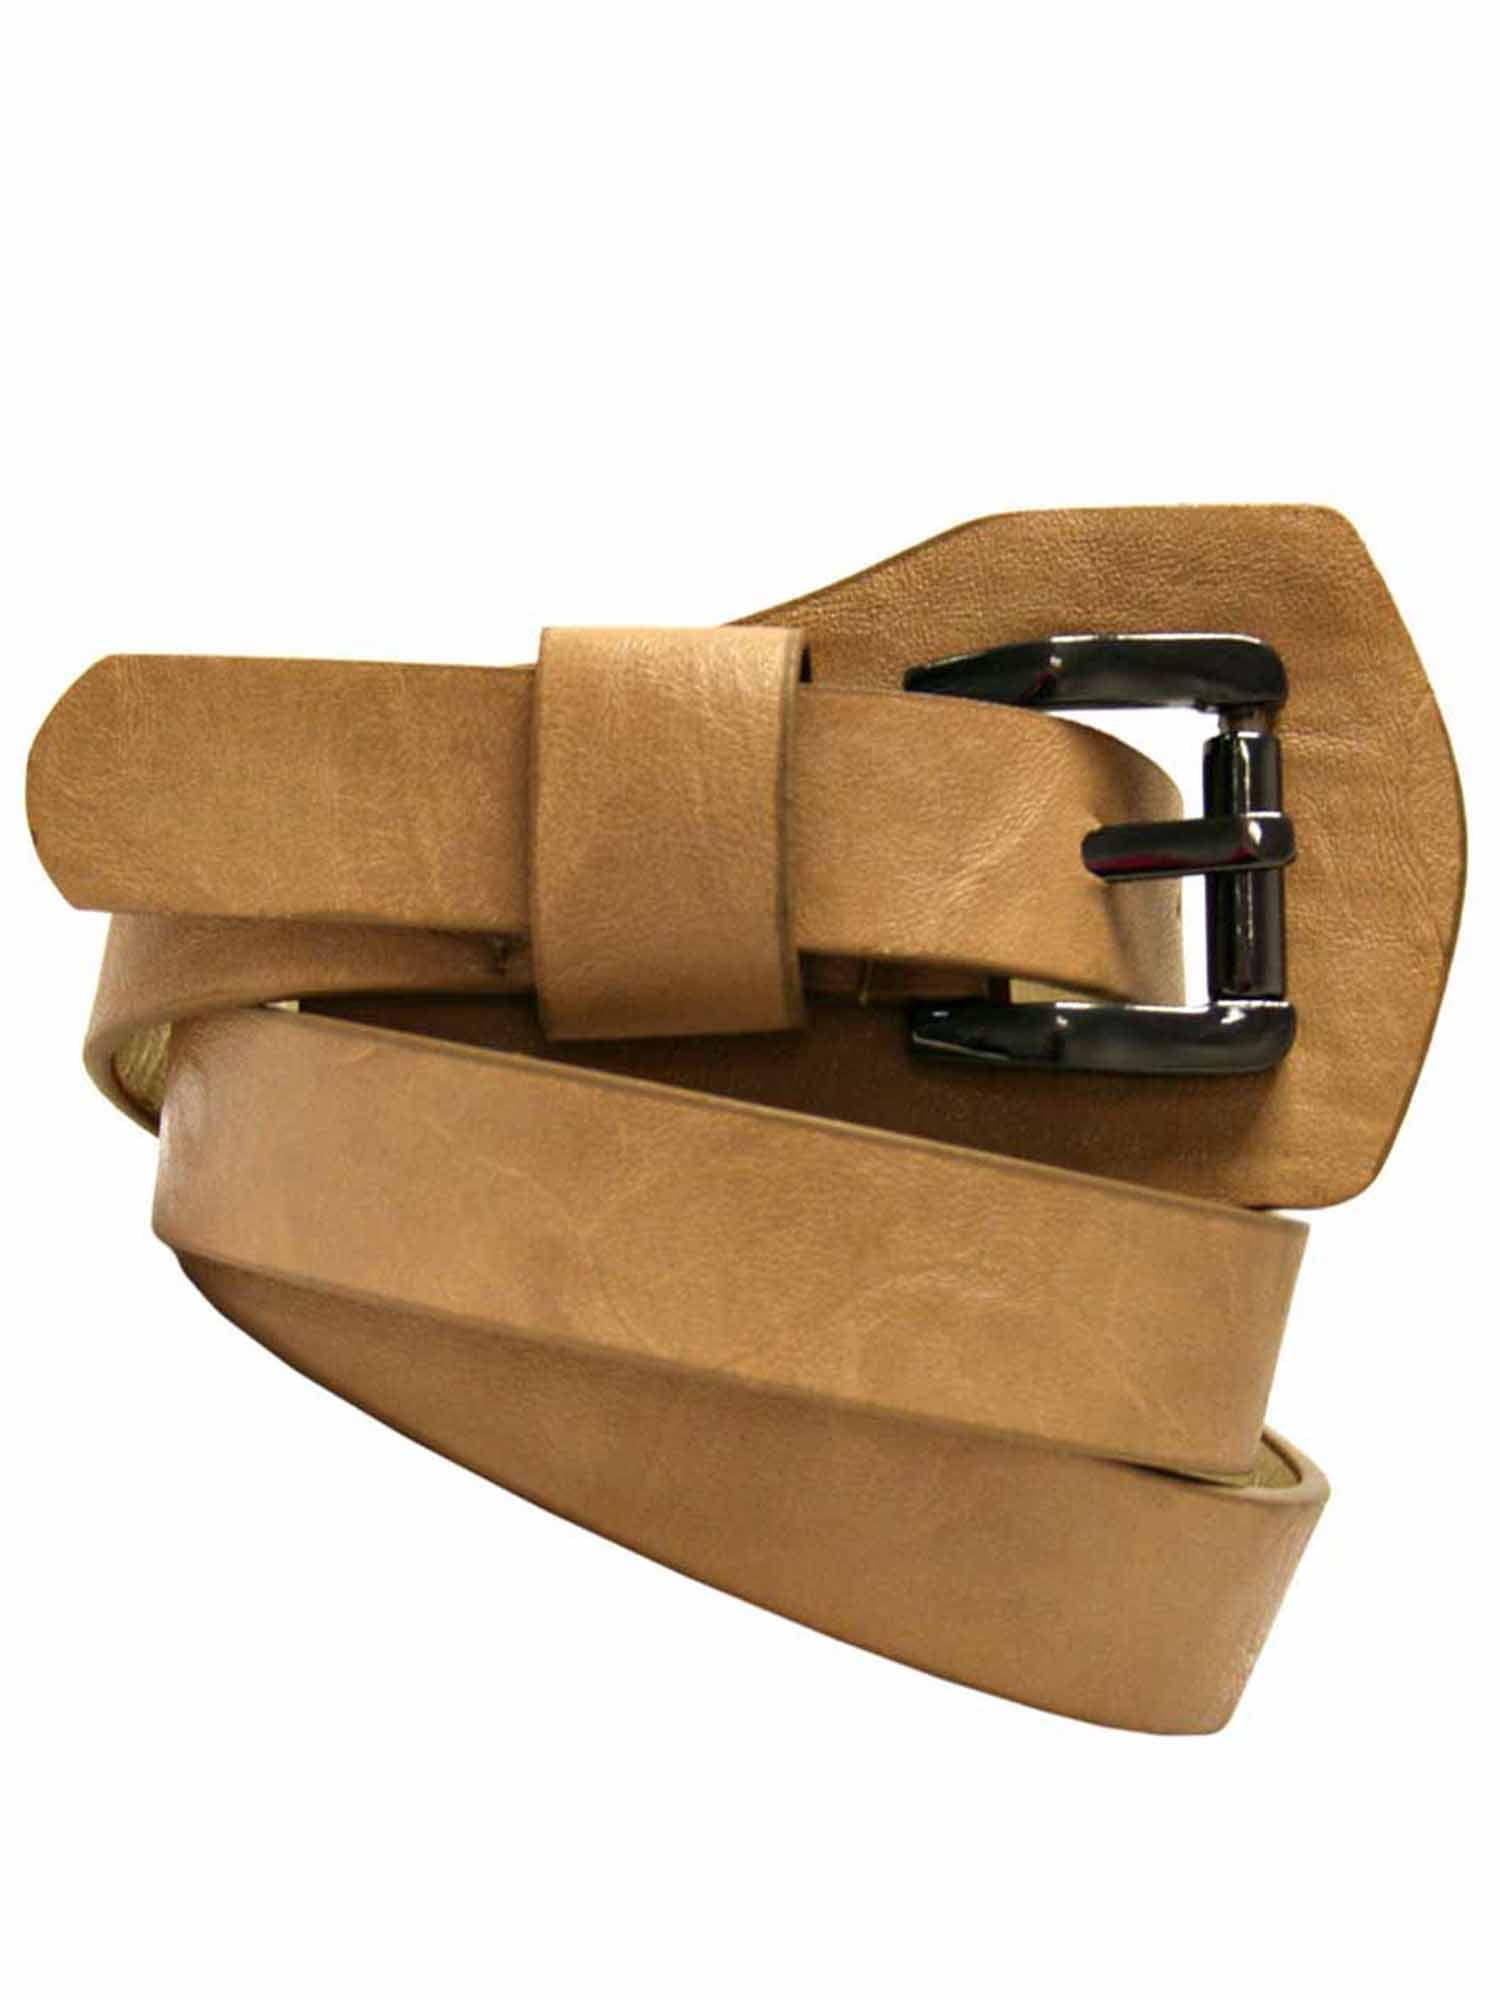 Hermes Belt Men's Constance Size 95 H Buckle Box Calf Muffler/Leather